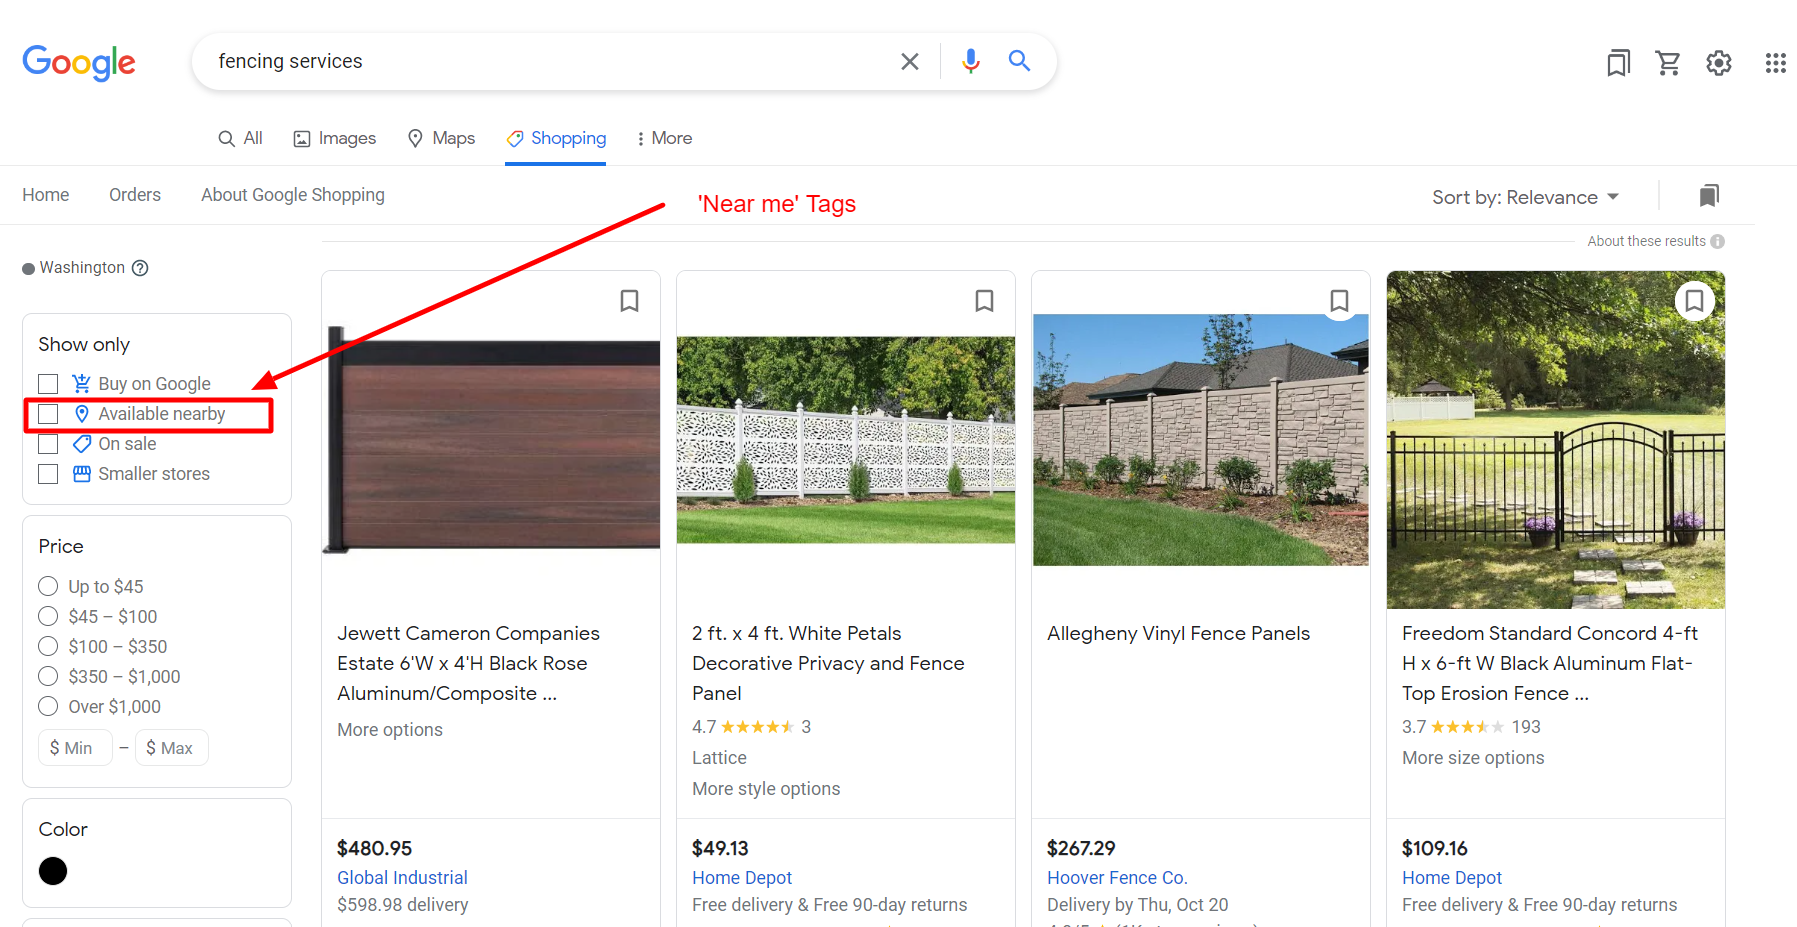 Near me Tags - Free listings across Google surfaces